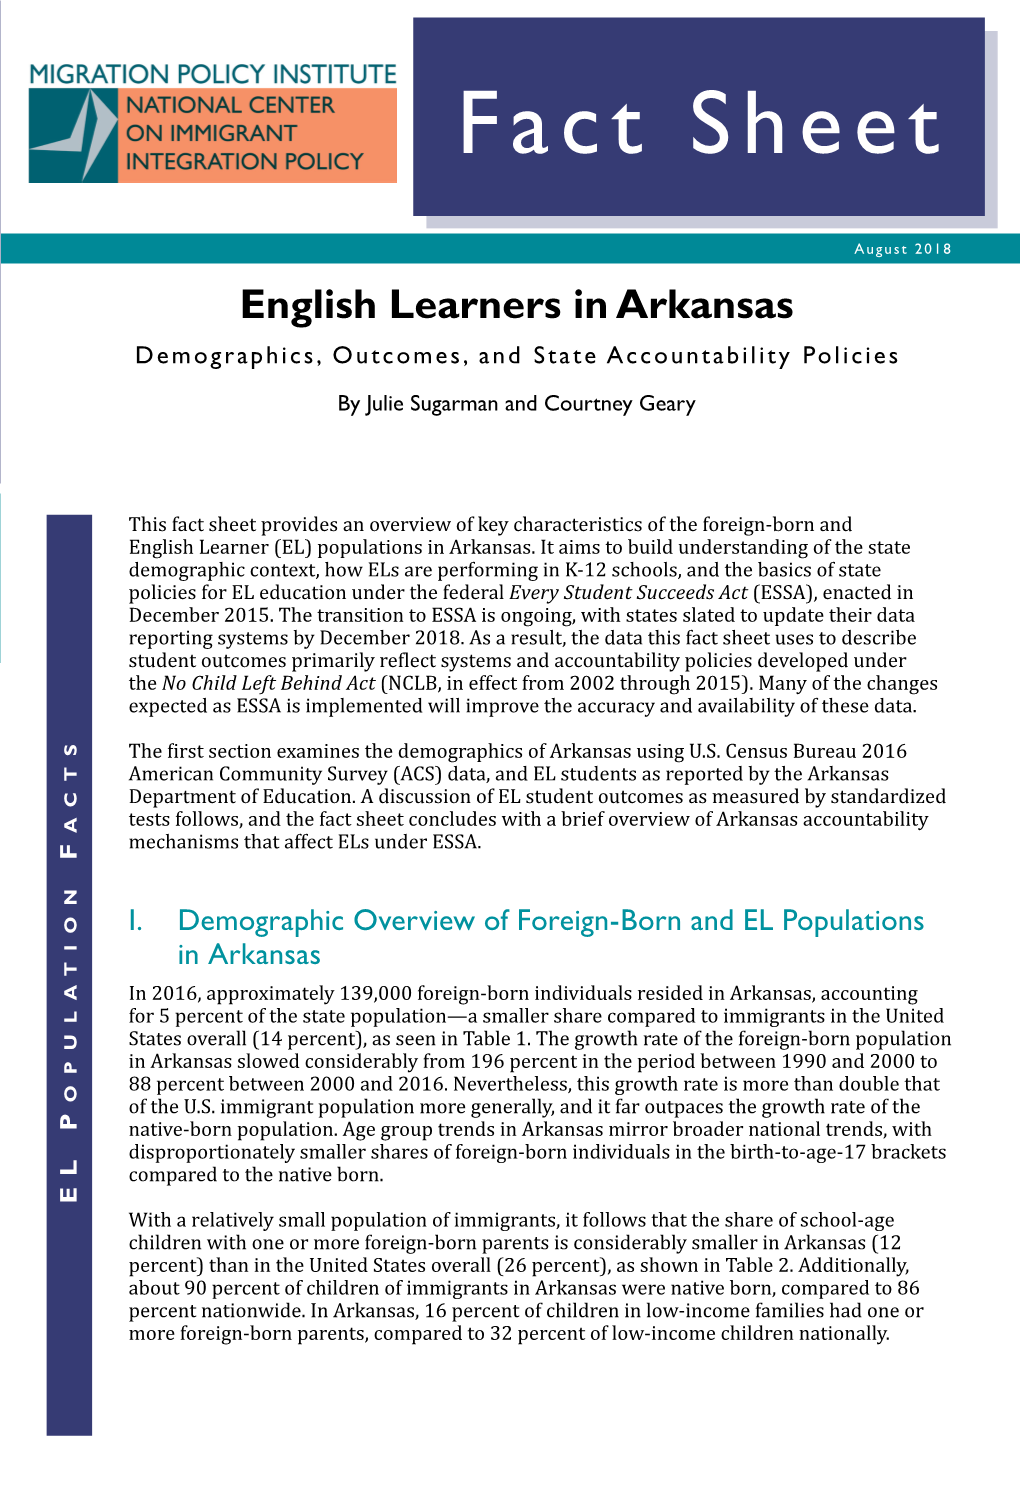 Arkansas Demographics, Outcomes, and State Accountability Policies